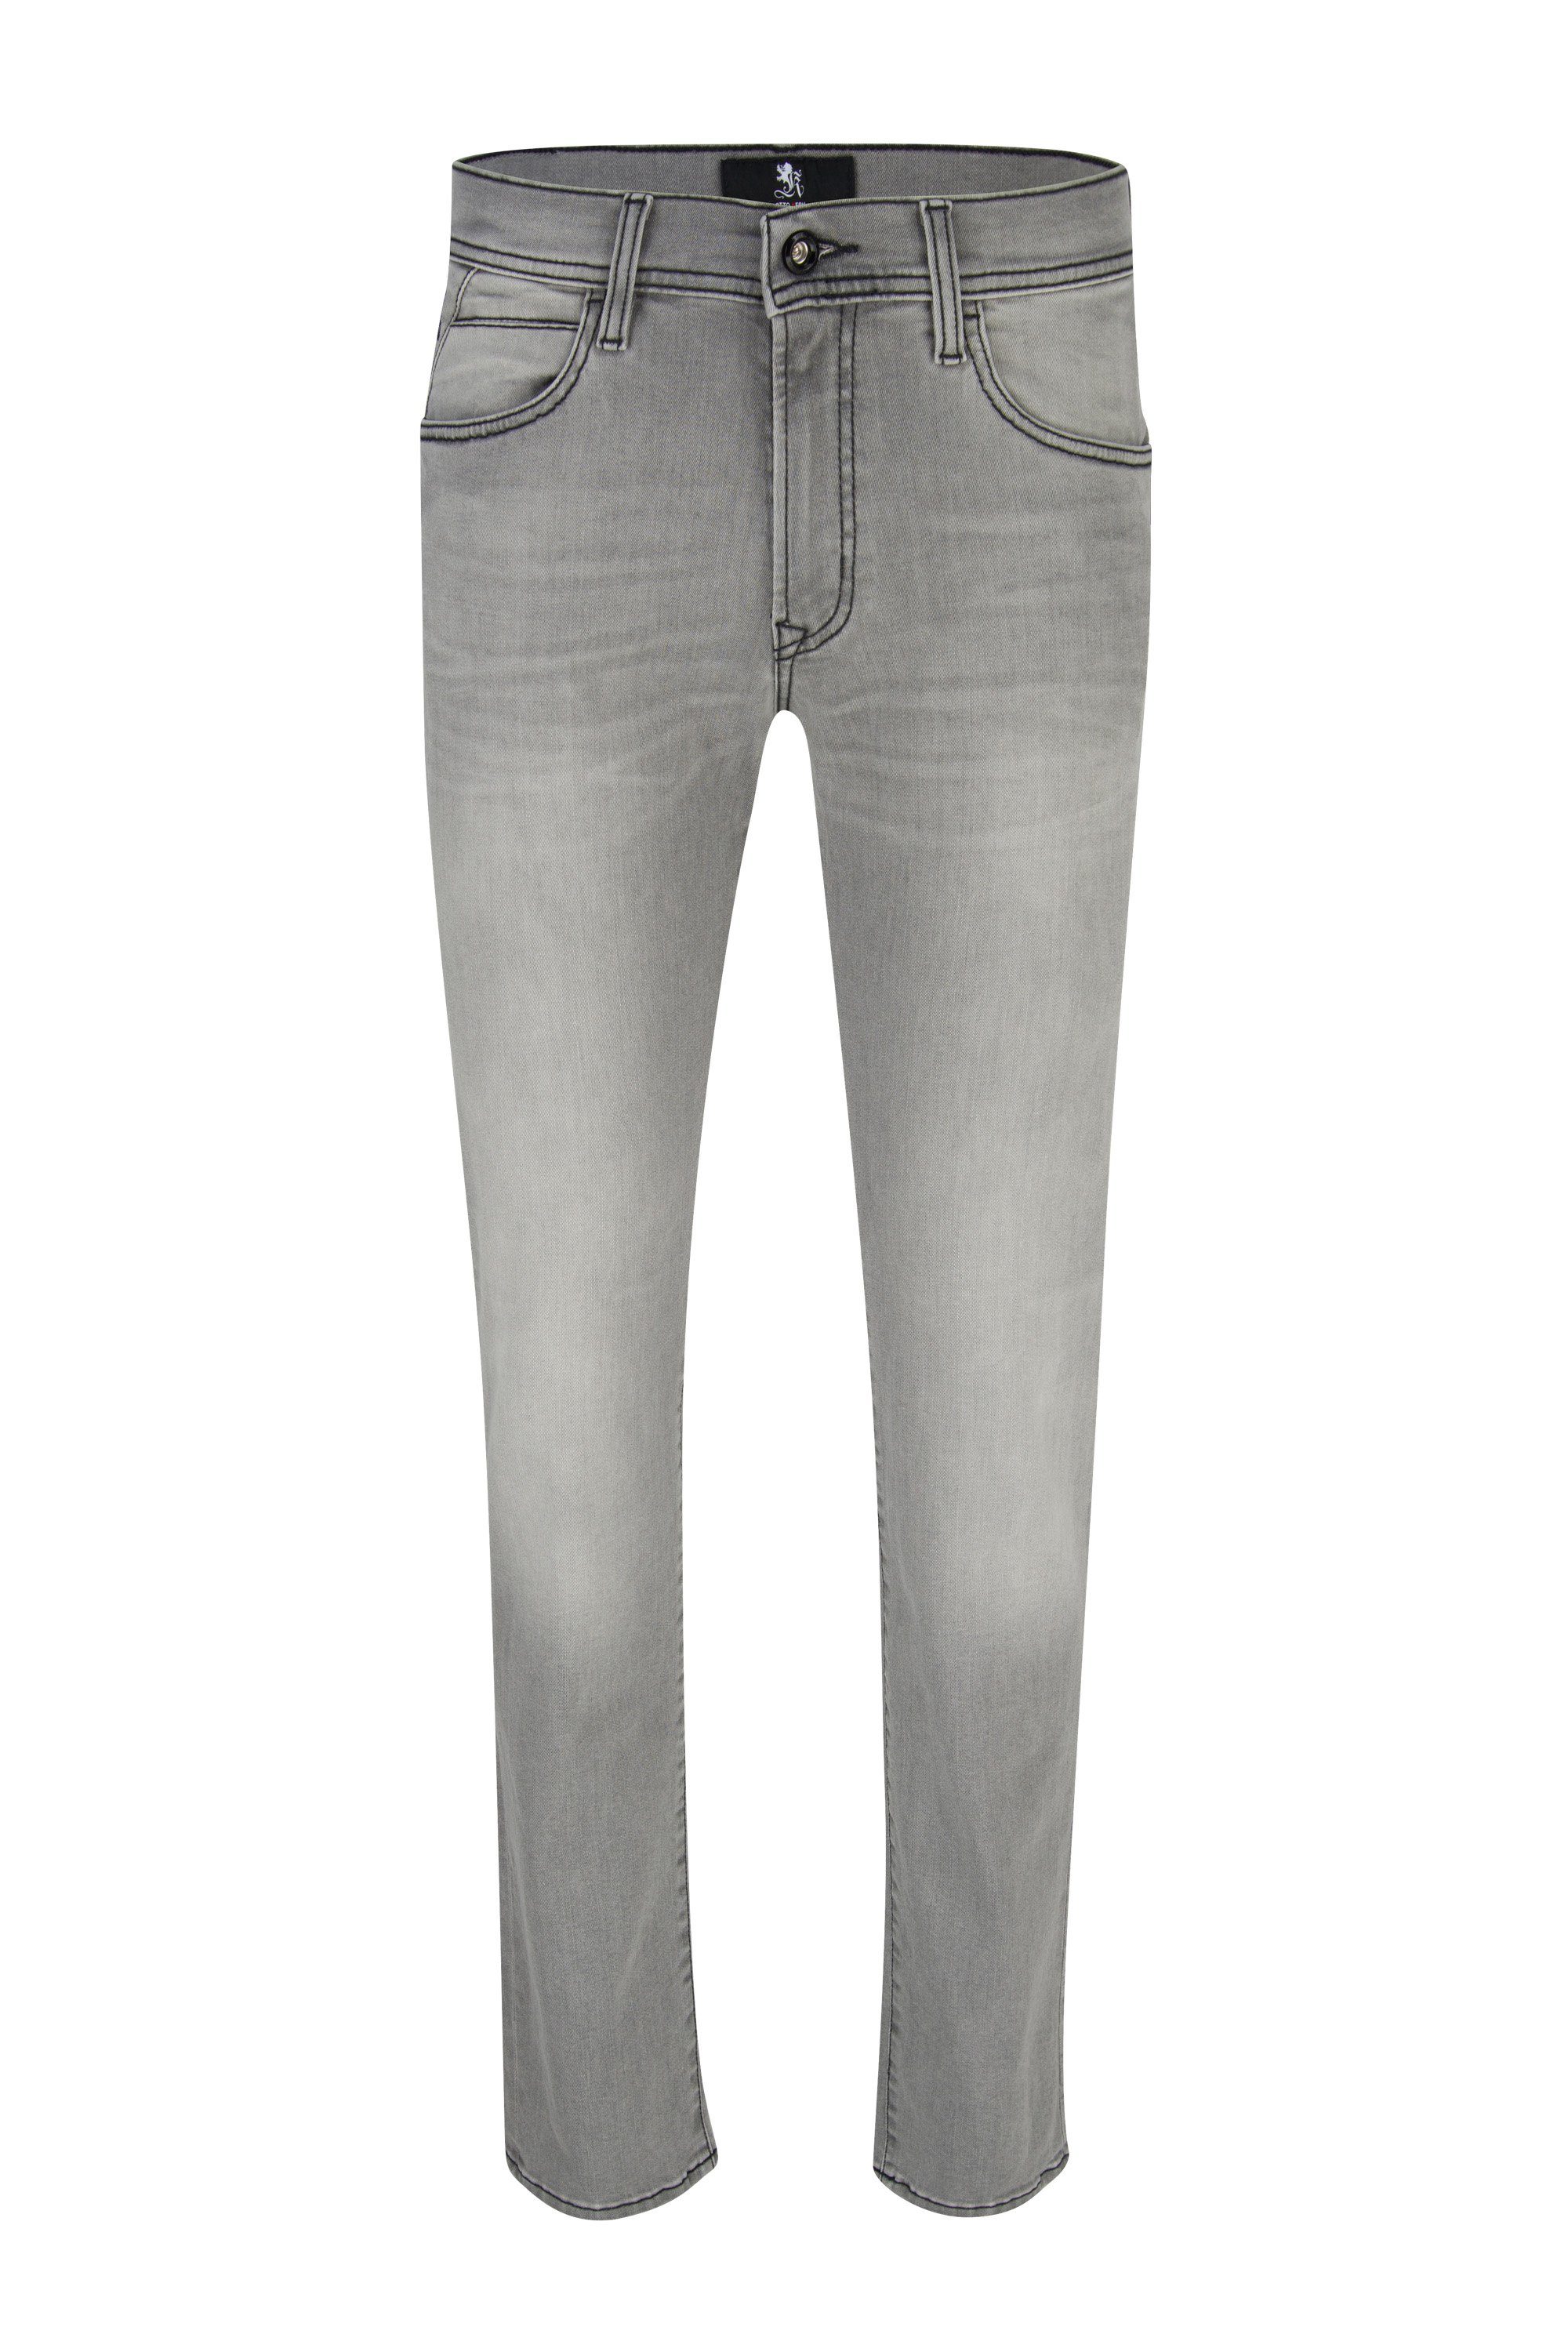  Kern 5-Pocket-Jeans OTTO KERN RAY light grey stonewash 67021 6835.9851 - Pure Dynamic